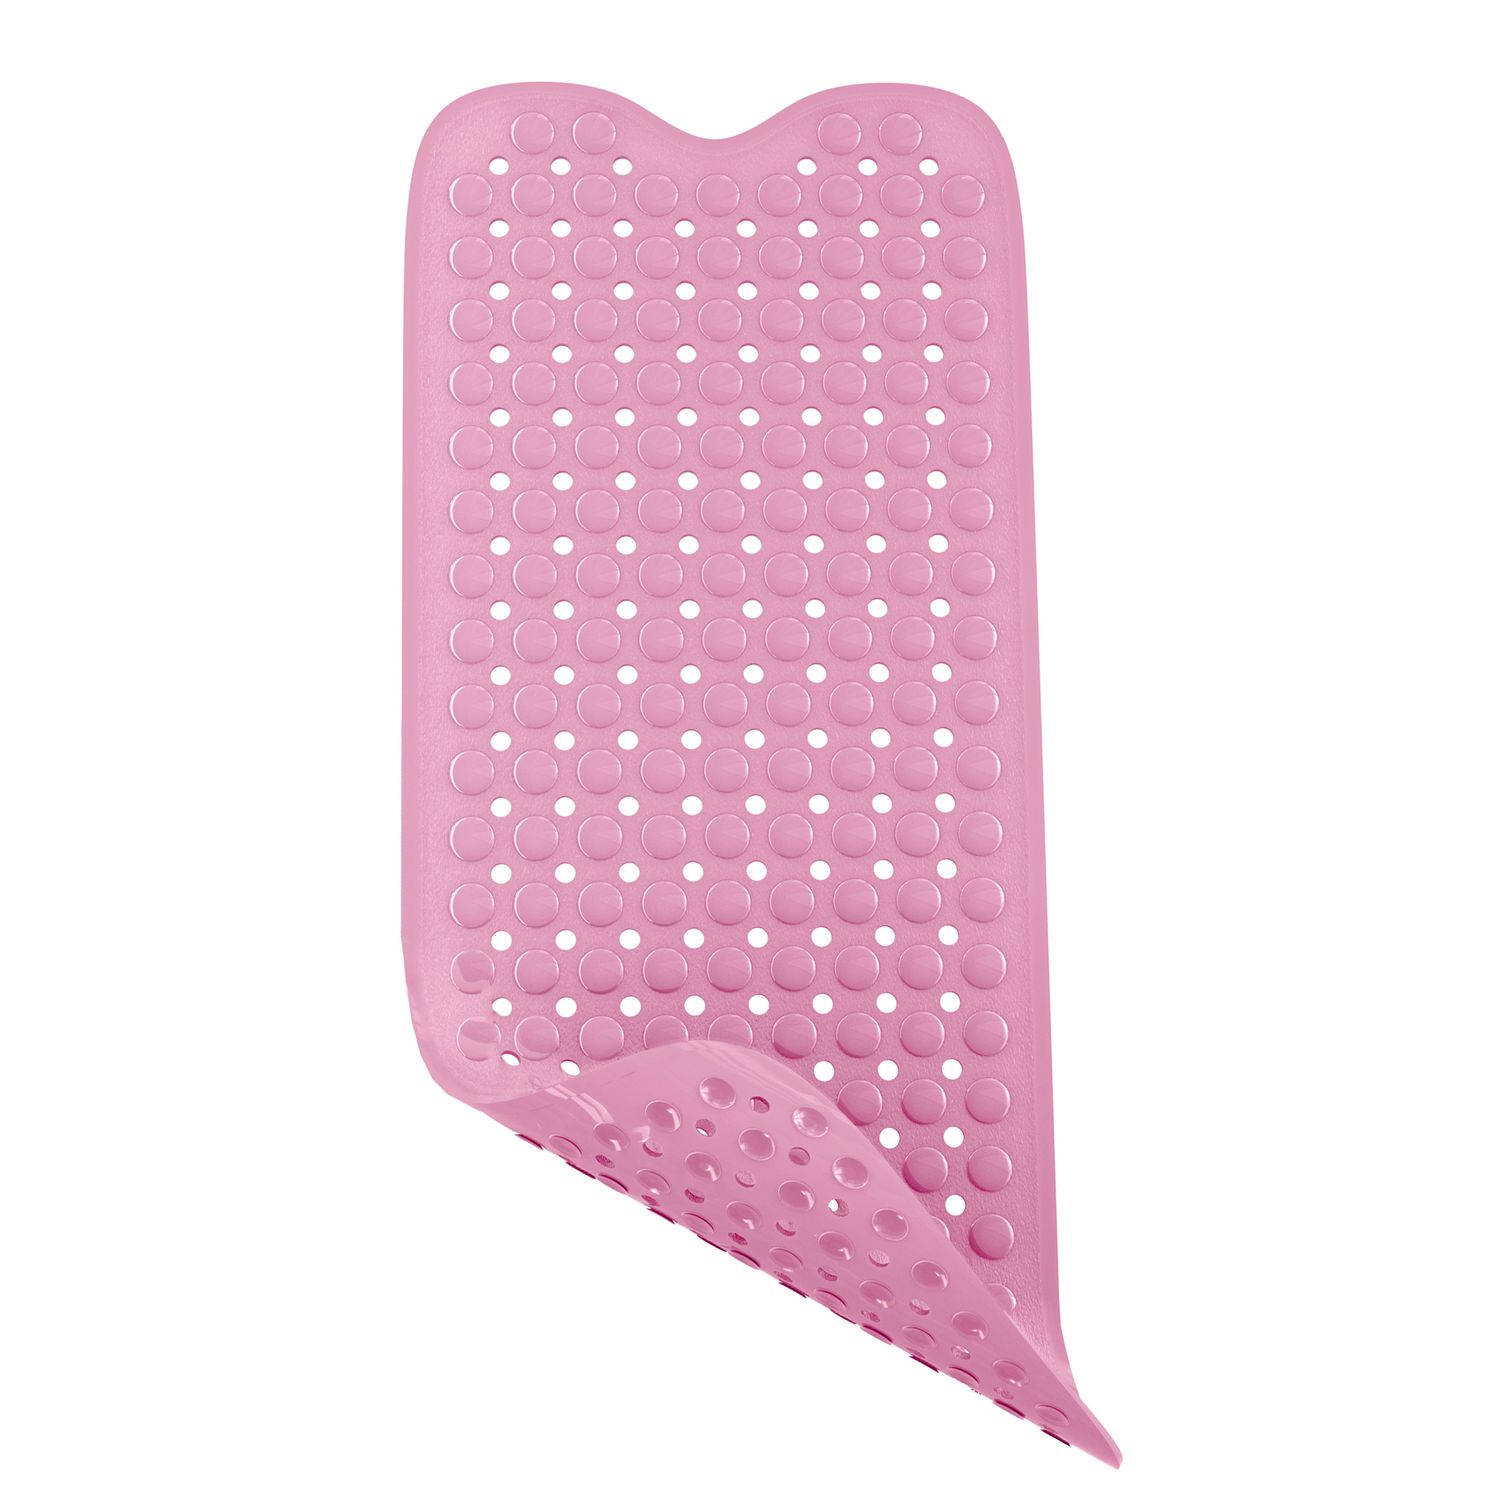 Intirilife antislip badmat in roze - huidgevoelig BPA-vrij schimmelbestendig douchemat machinewasbaar